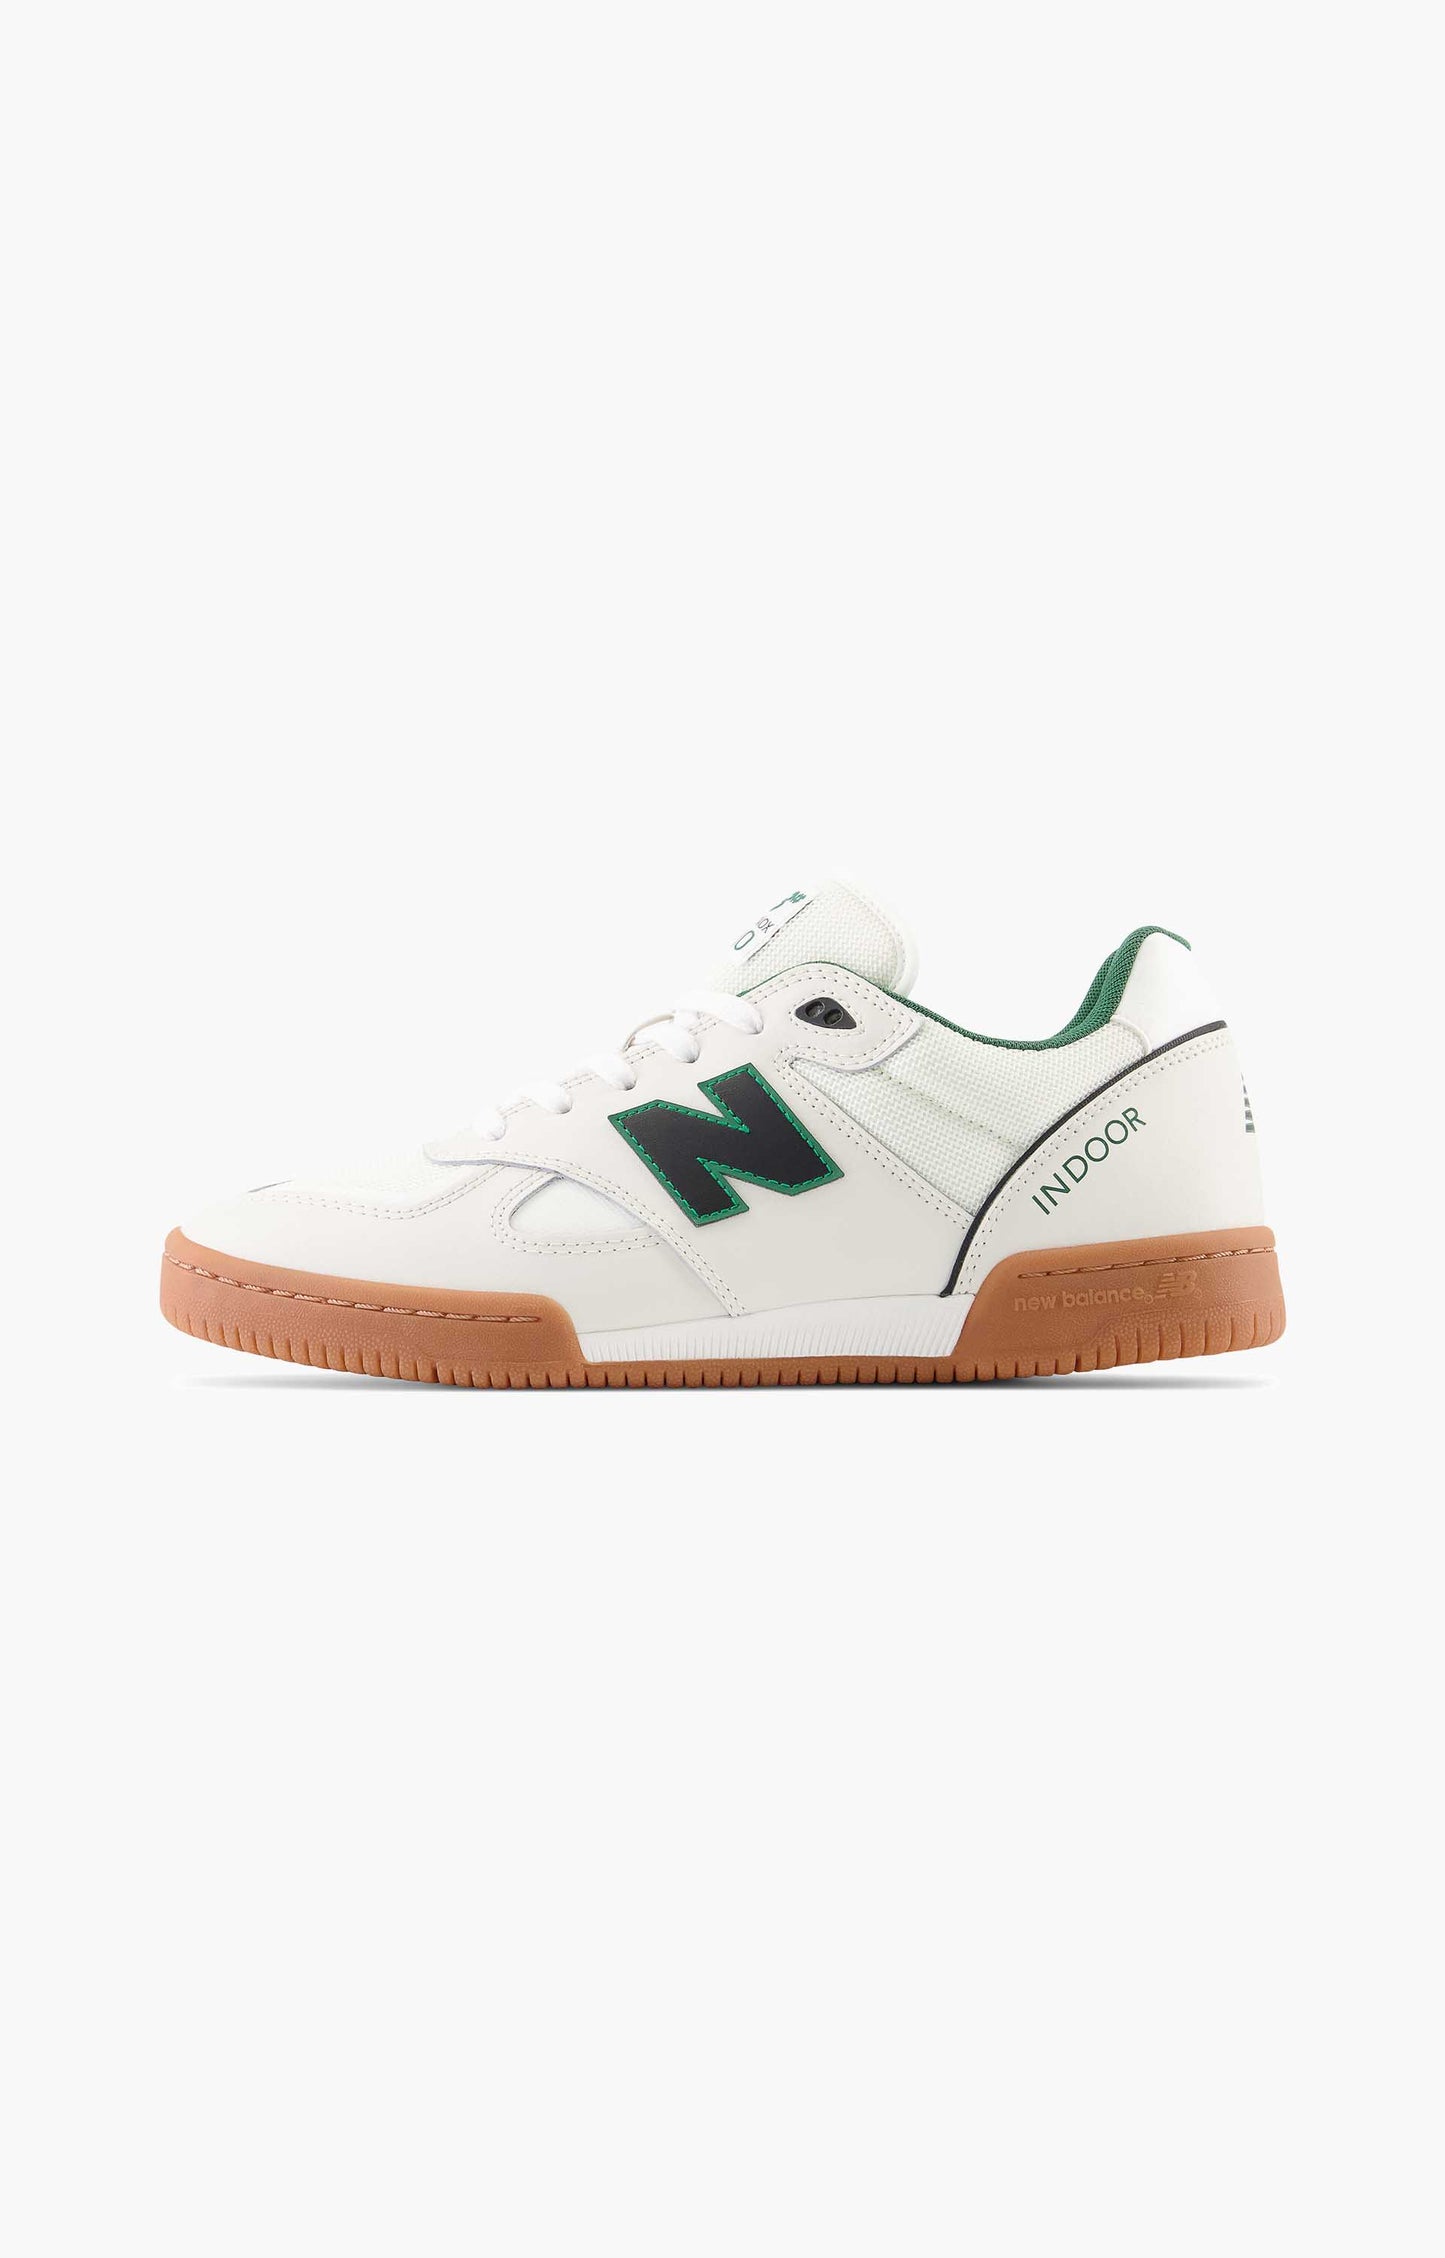 New Balance Numeric Tom Knox NM600OGS Shoe, White/Gum